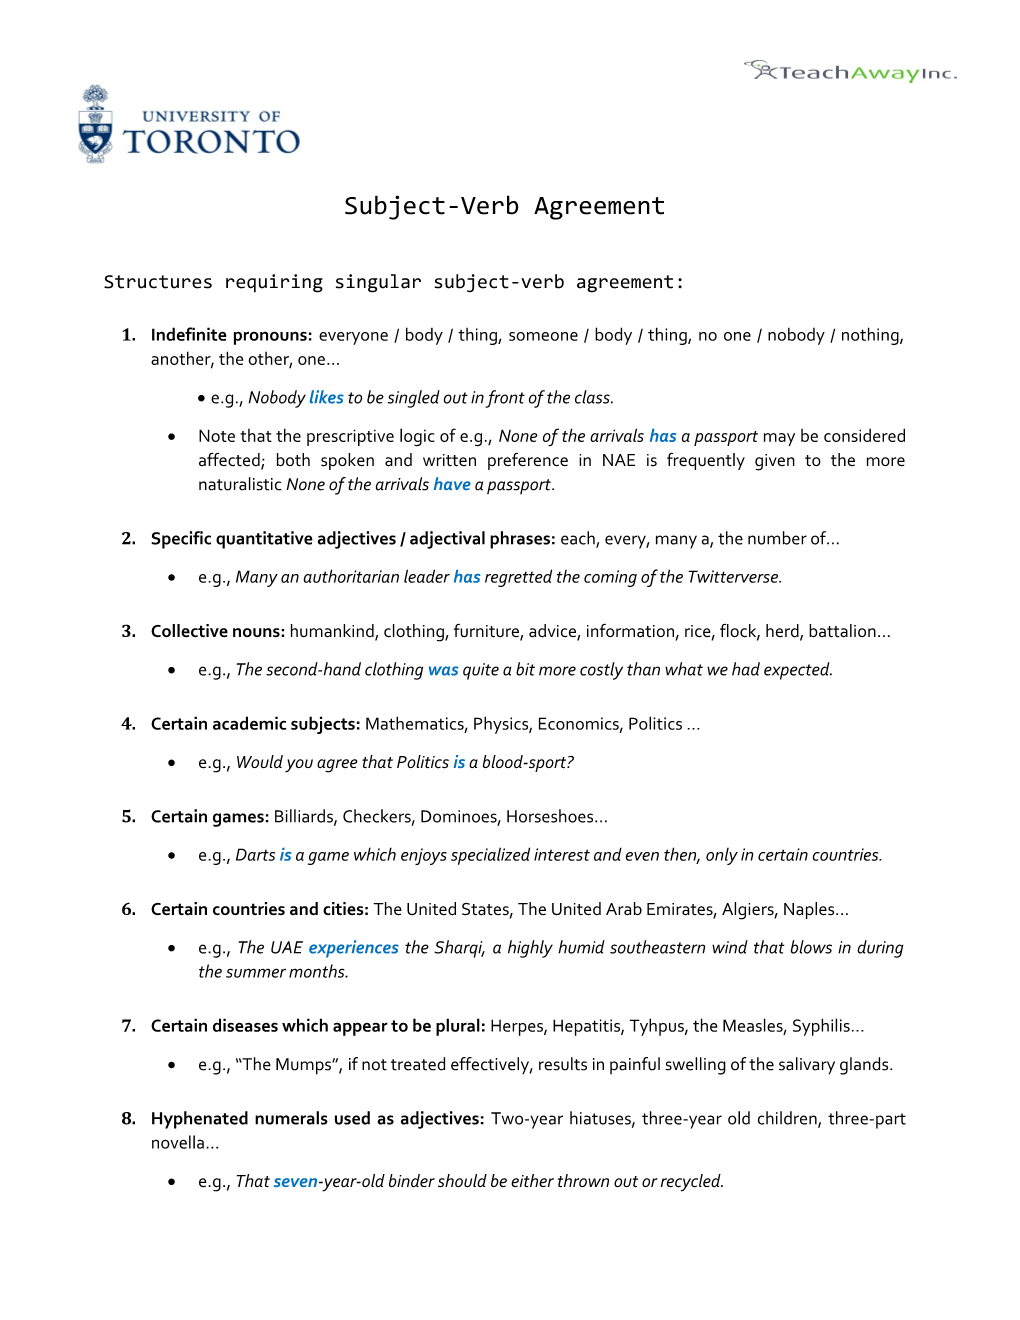 Structures Requiring Singular Subject-Verb Agreement